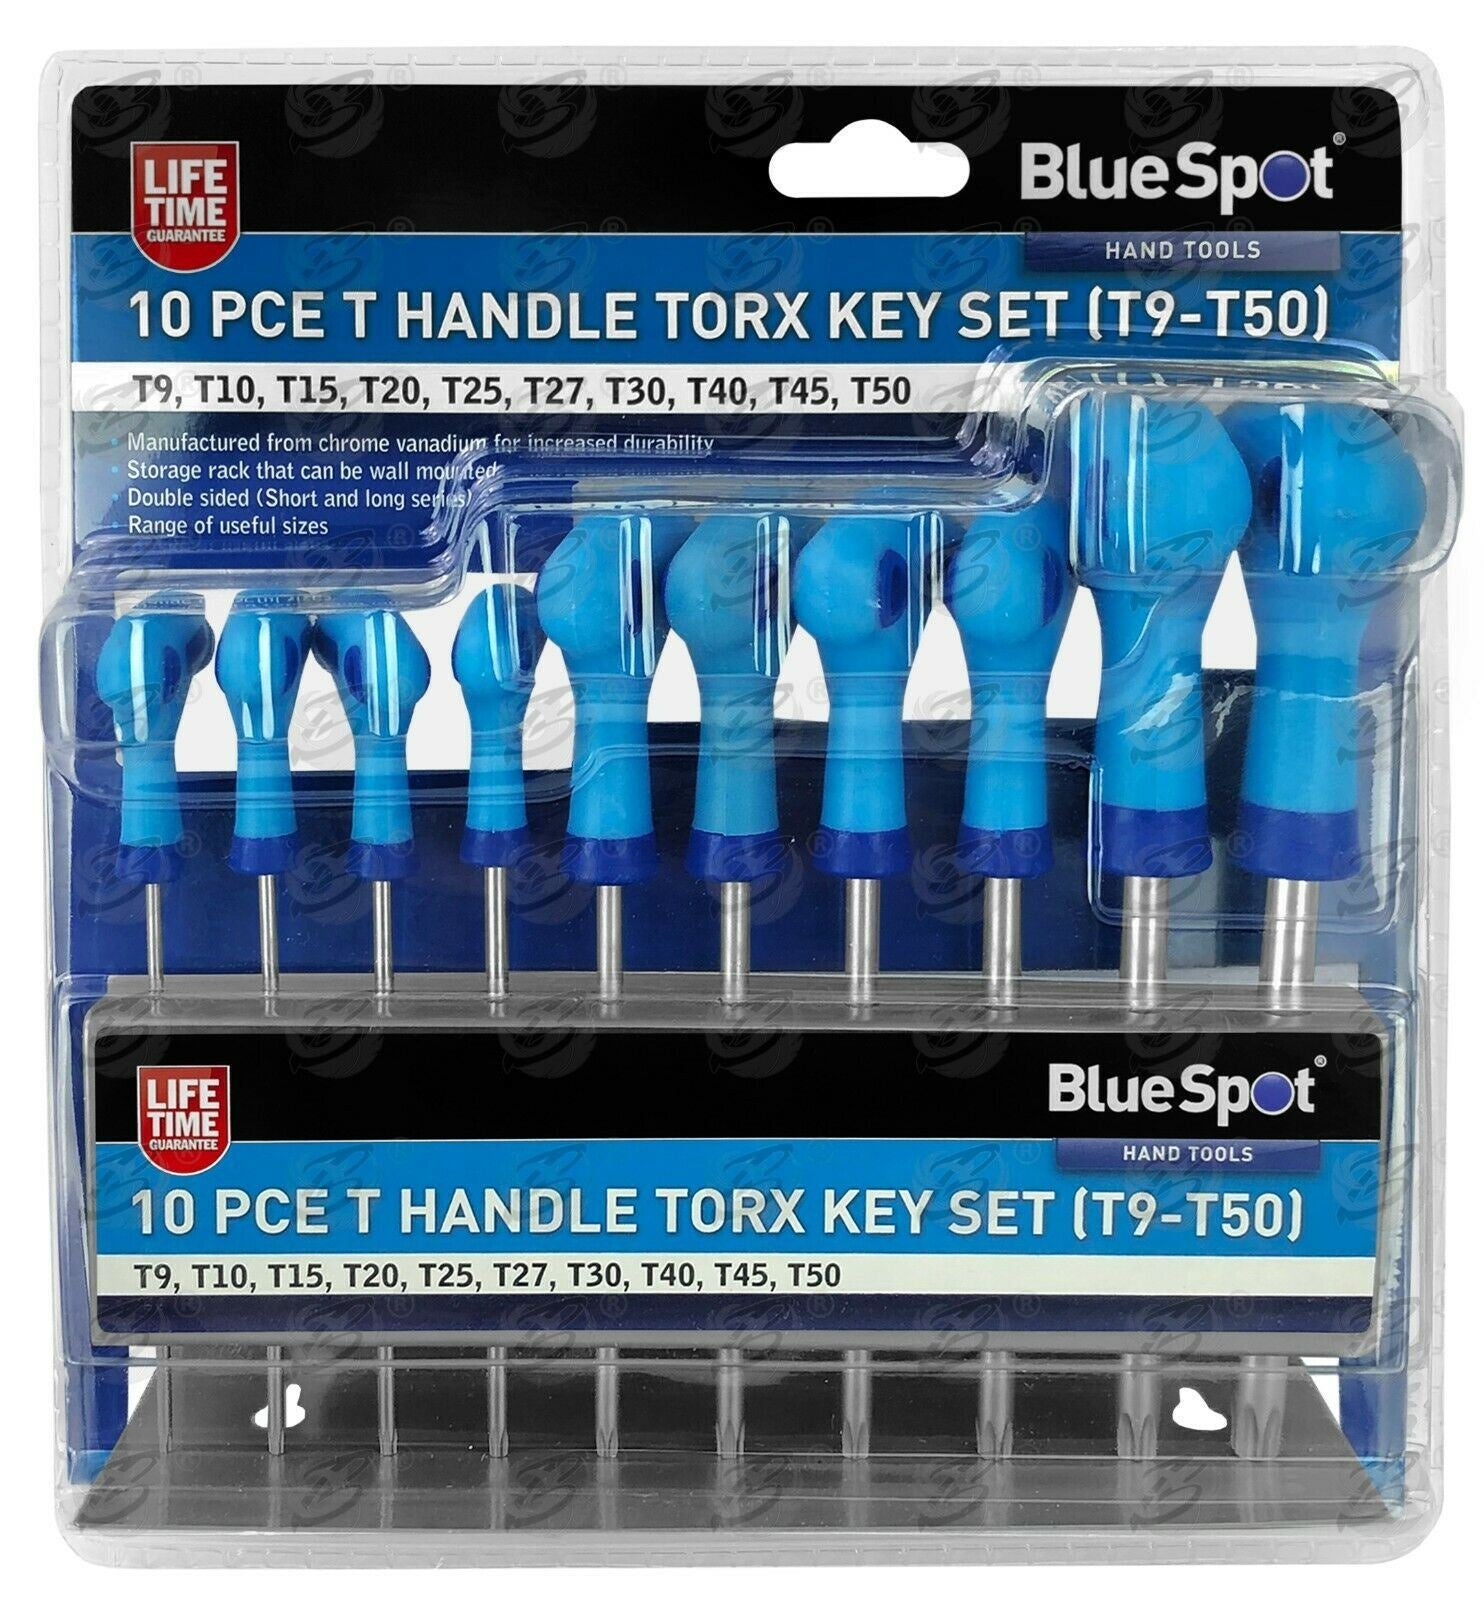 BLUESPOT 10PCS T HANDLE TORX KEY SET T9 - T50